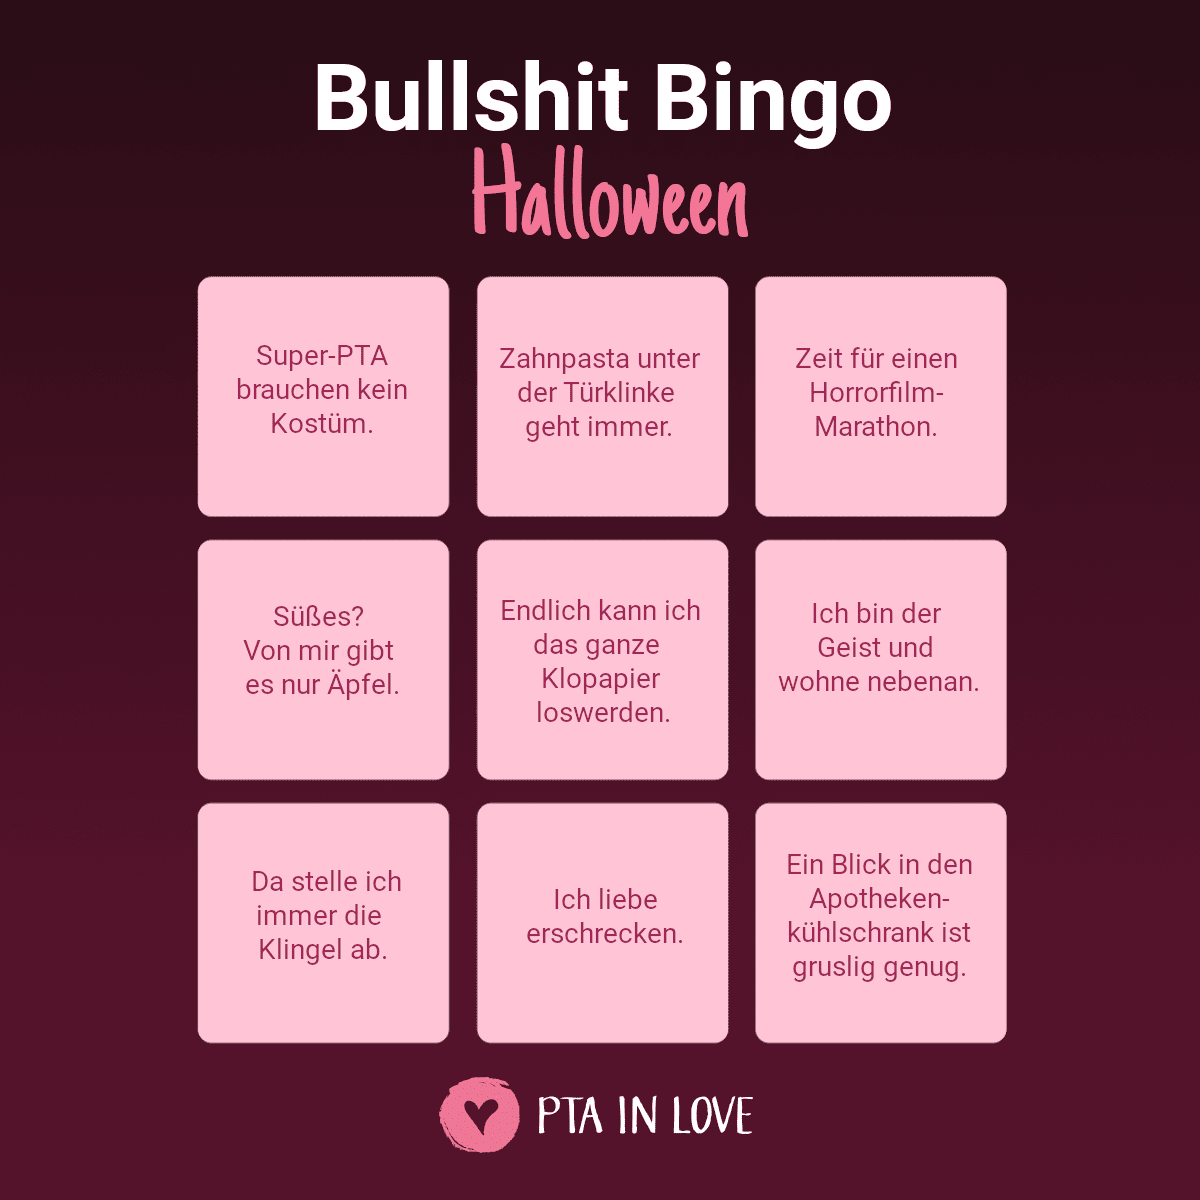 Bullshit-Bingo Halloween